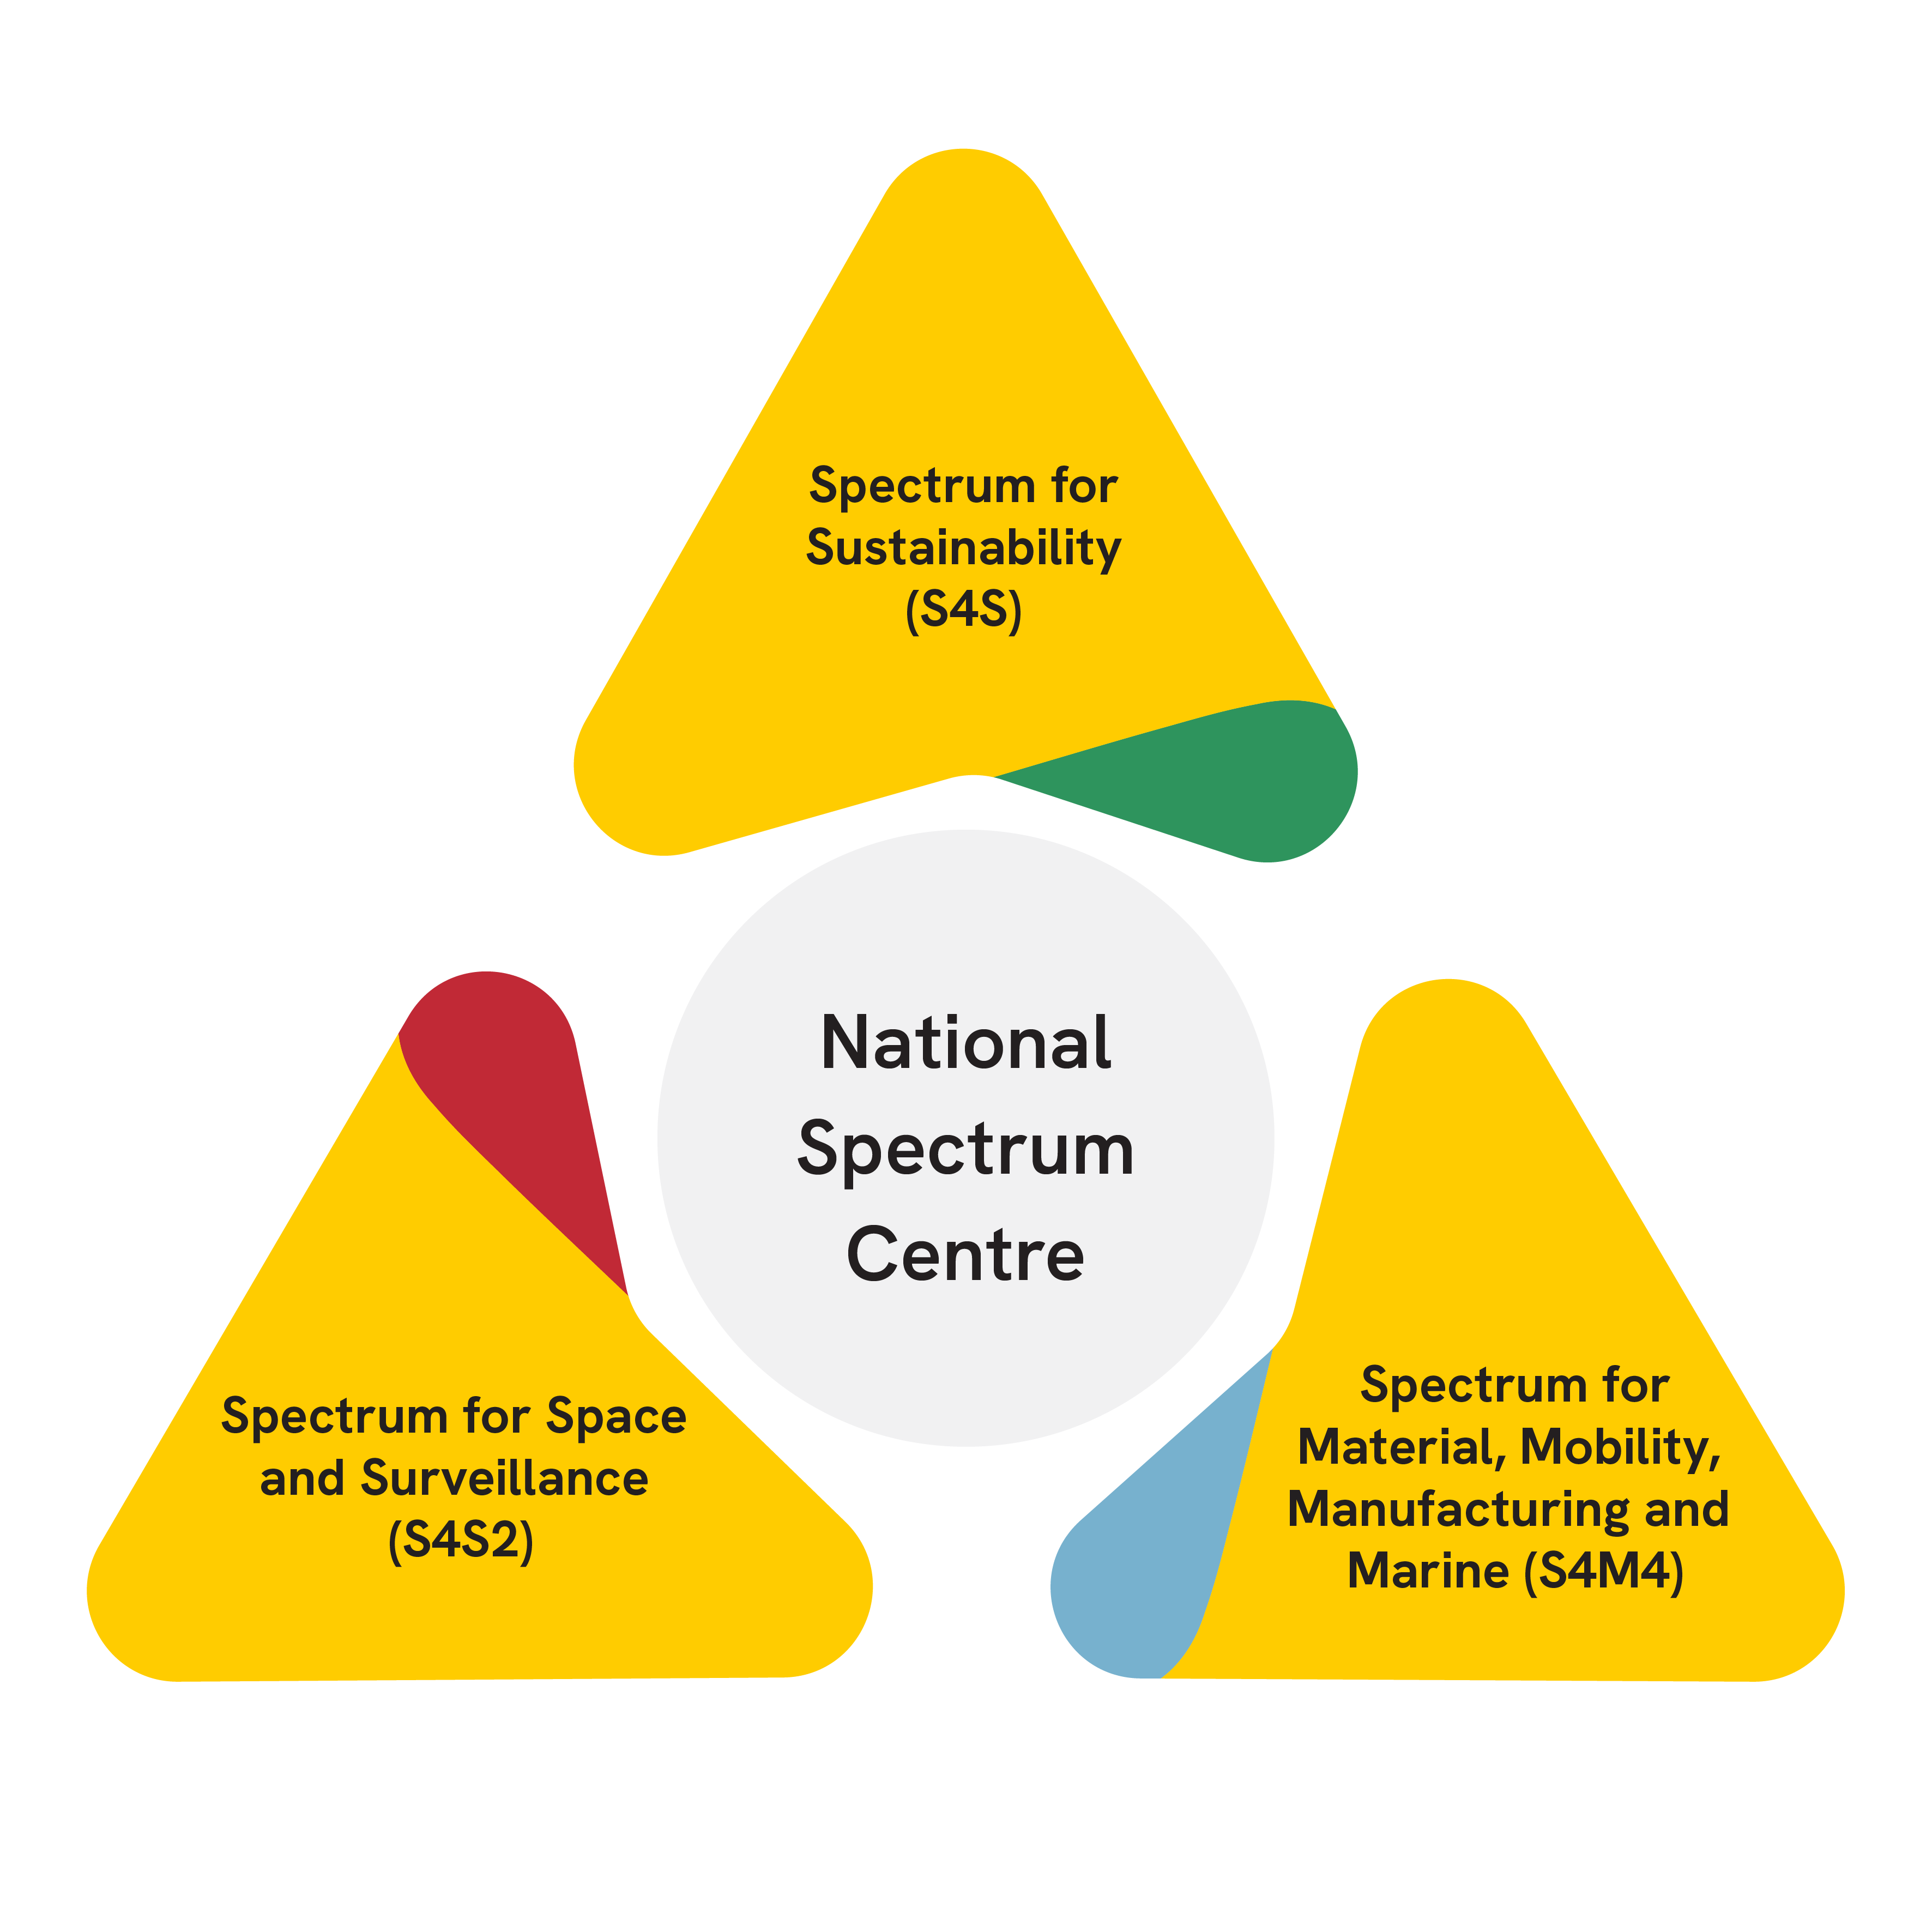 National Spectrum Centre triangle